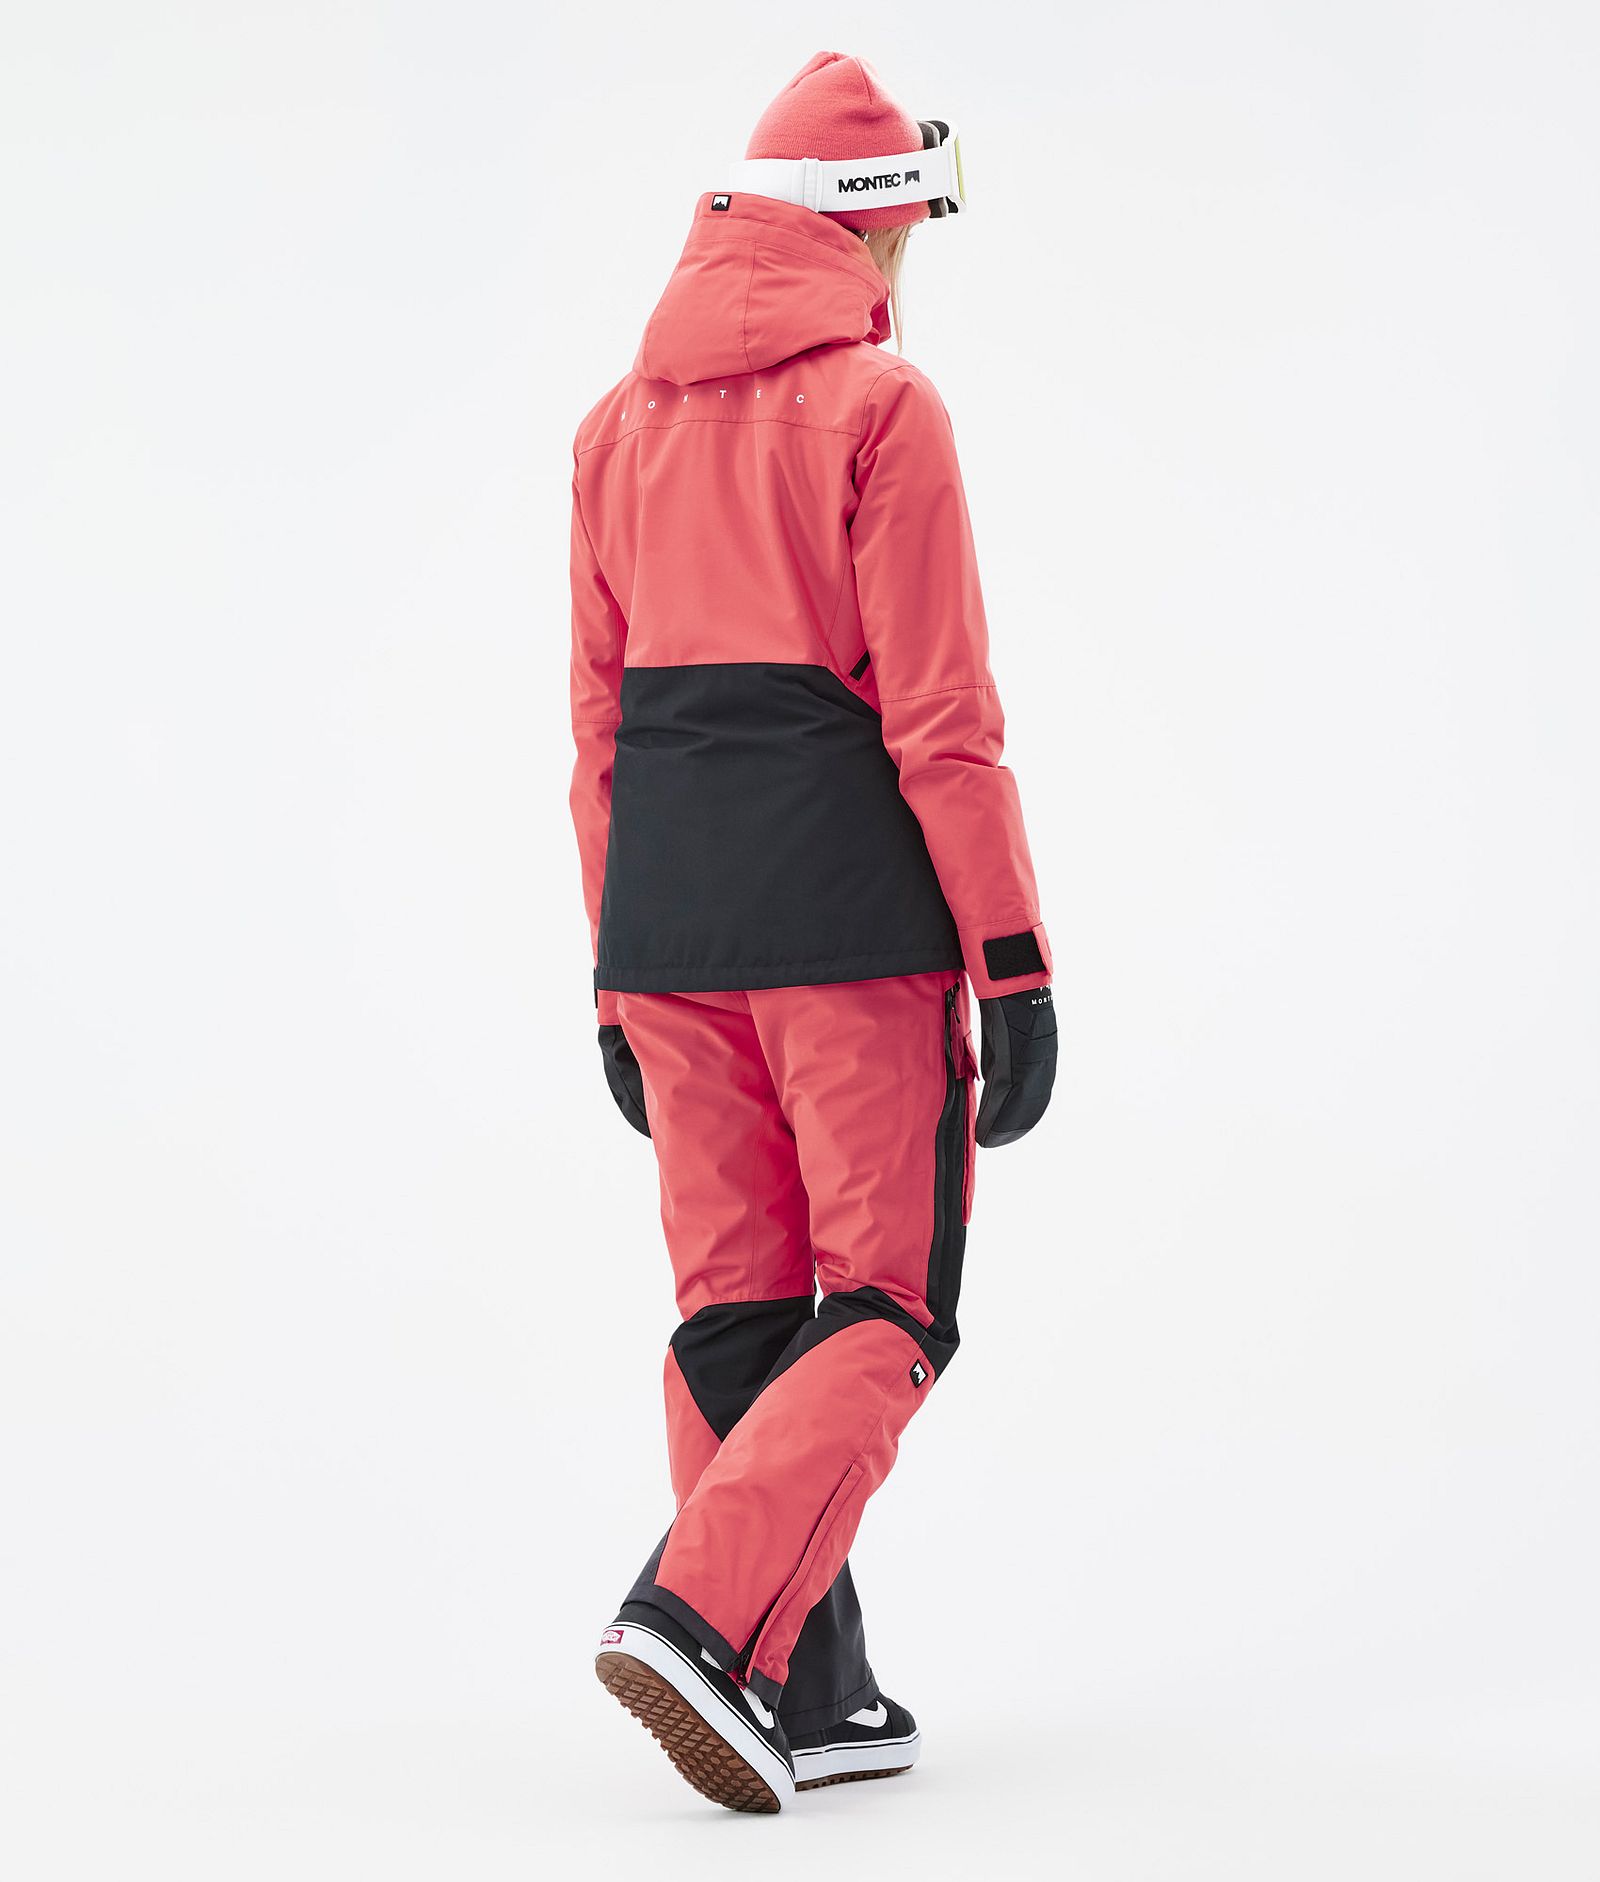 Moss W Snowboard Jacket Women Coral/Black Renewed, Image 6 of 11